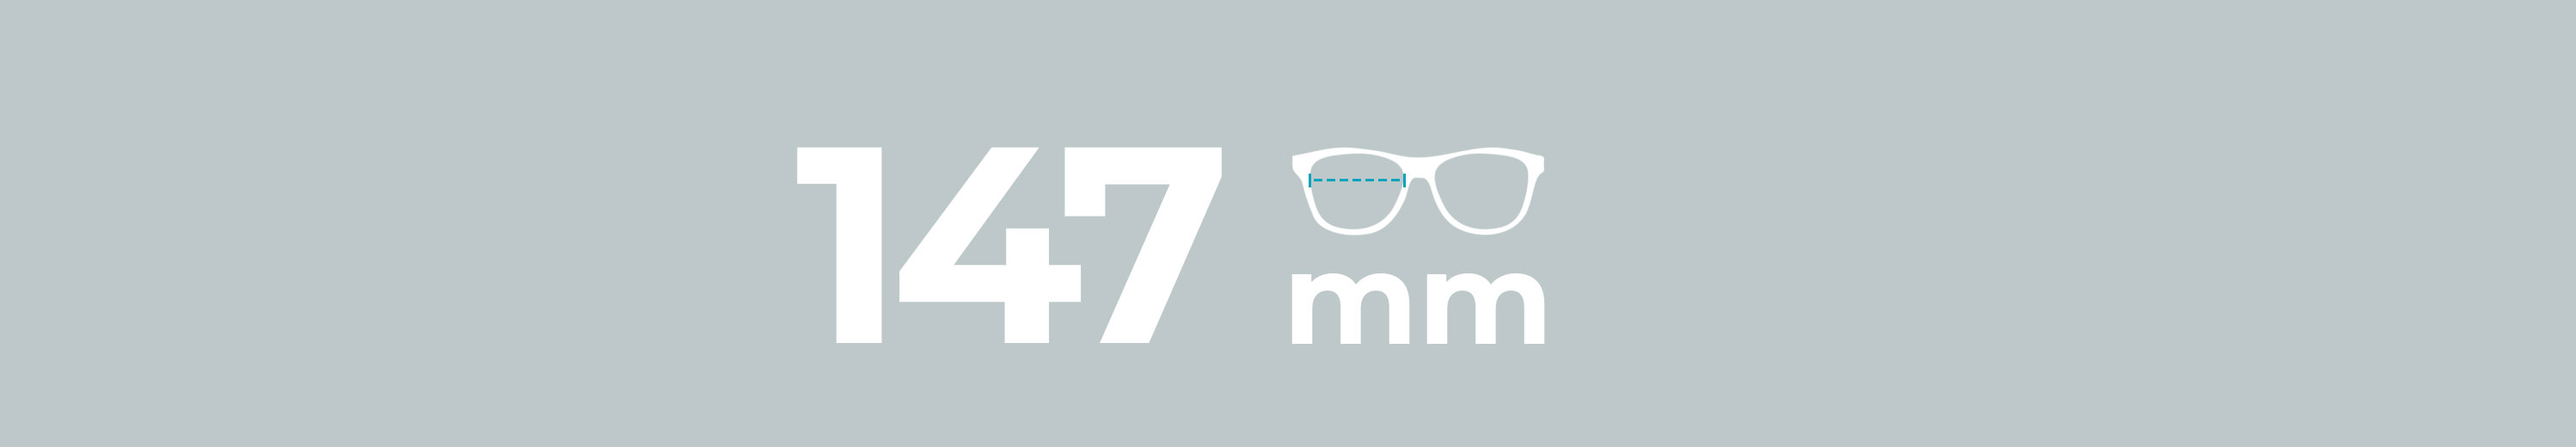 Lens Size: 147mm Glasses